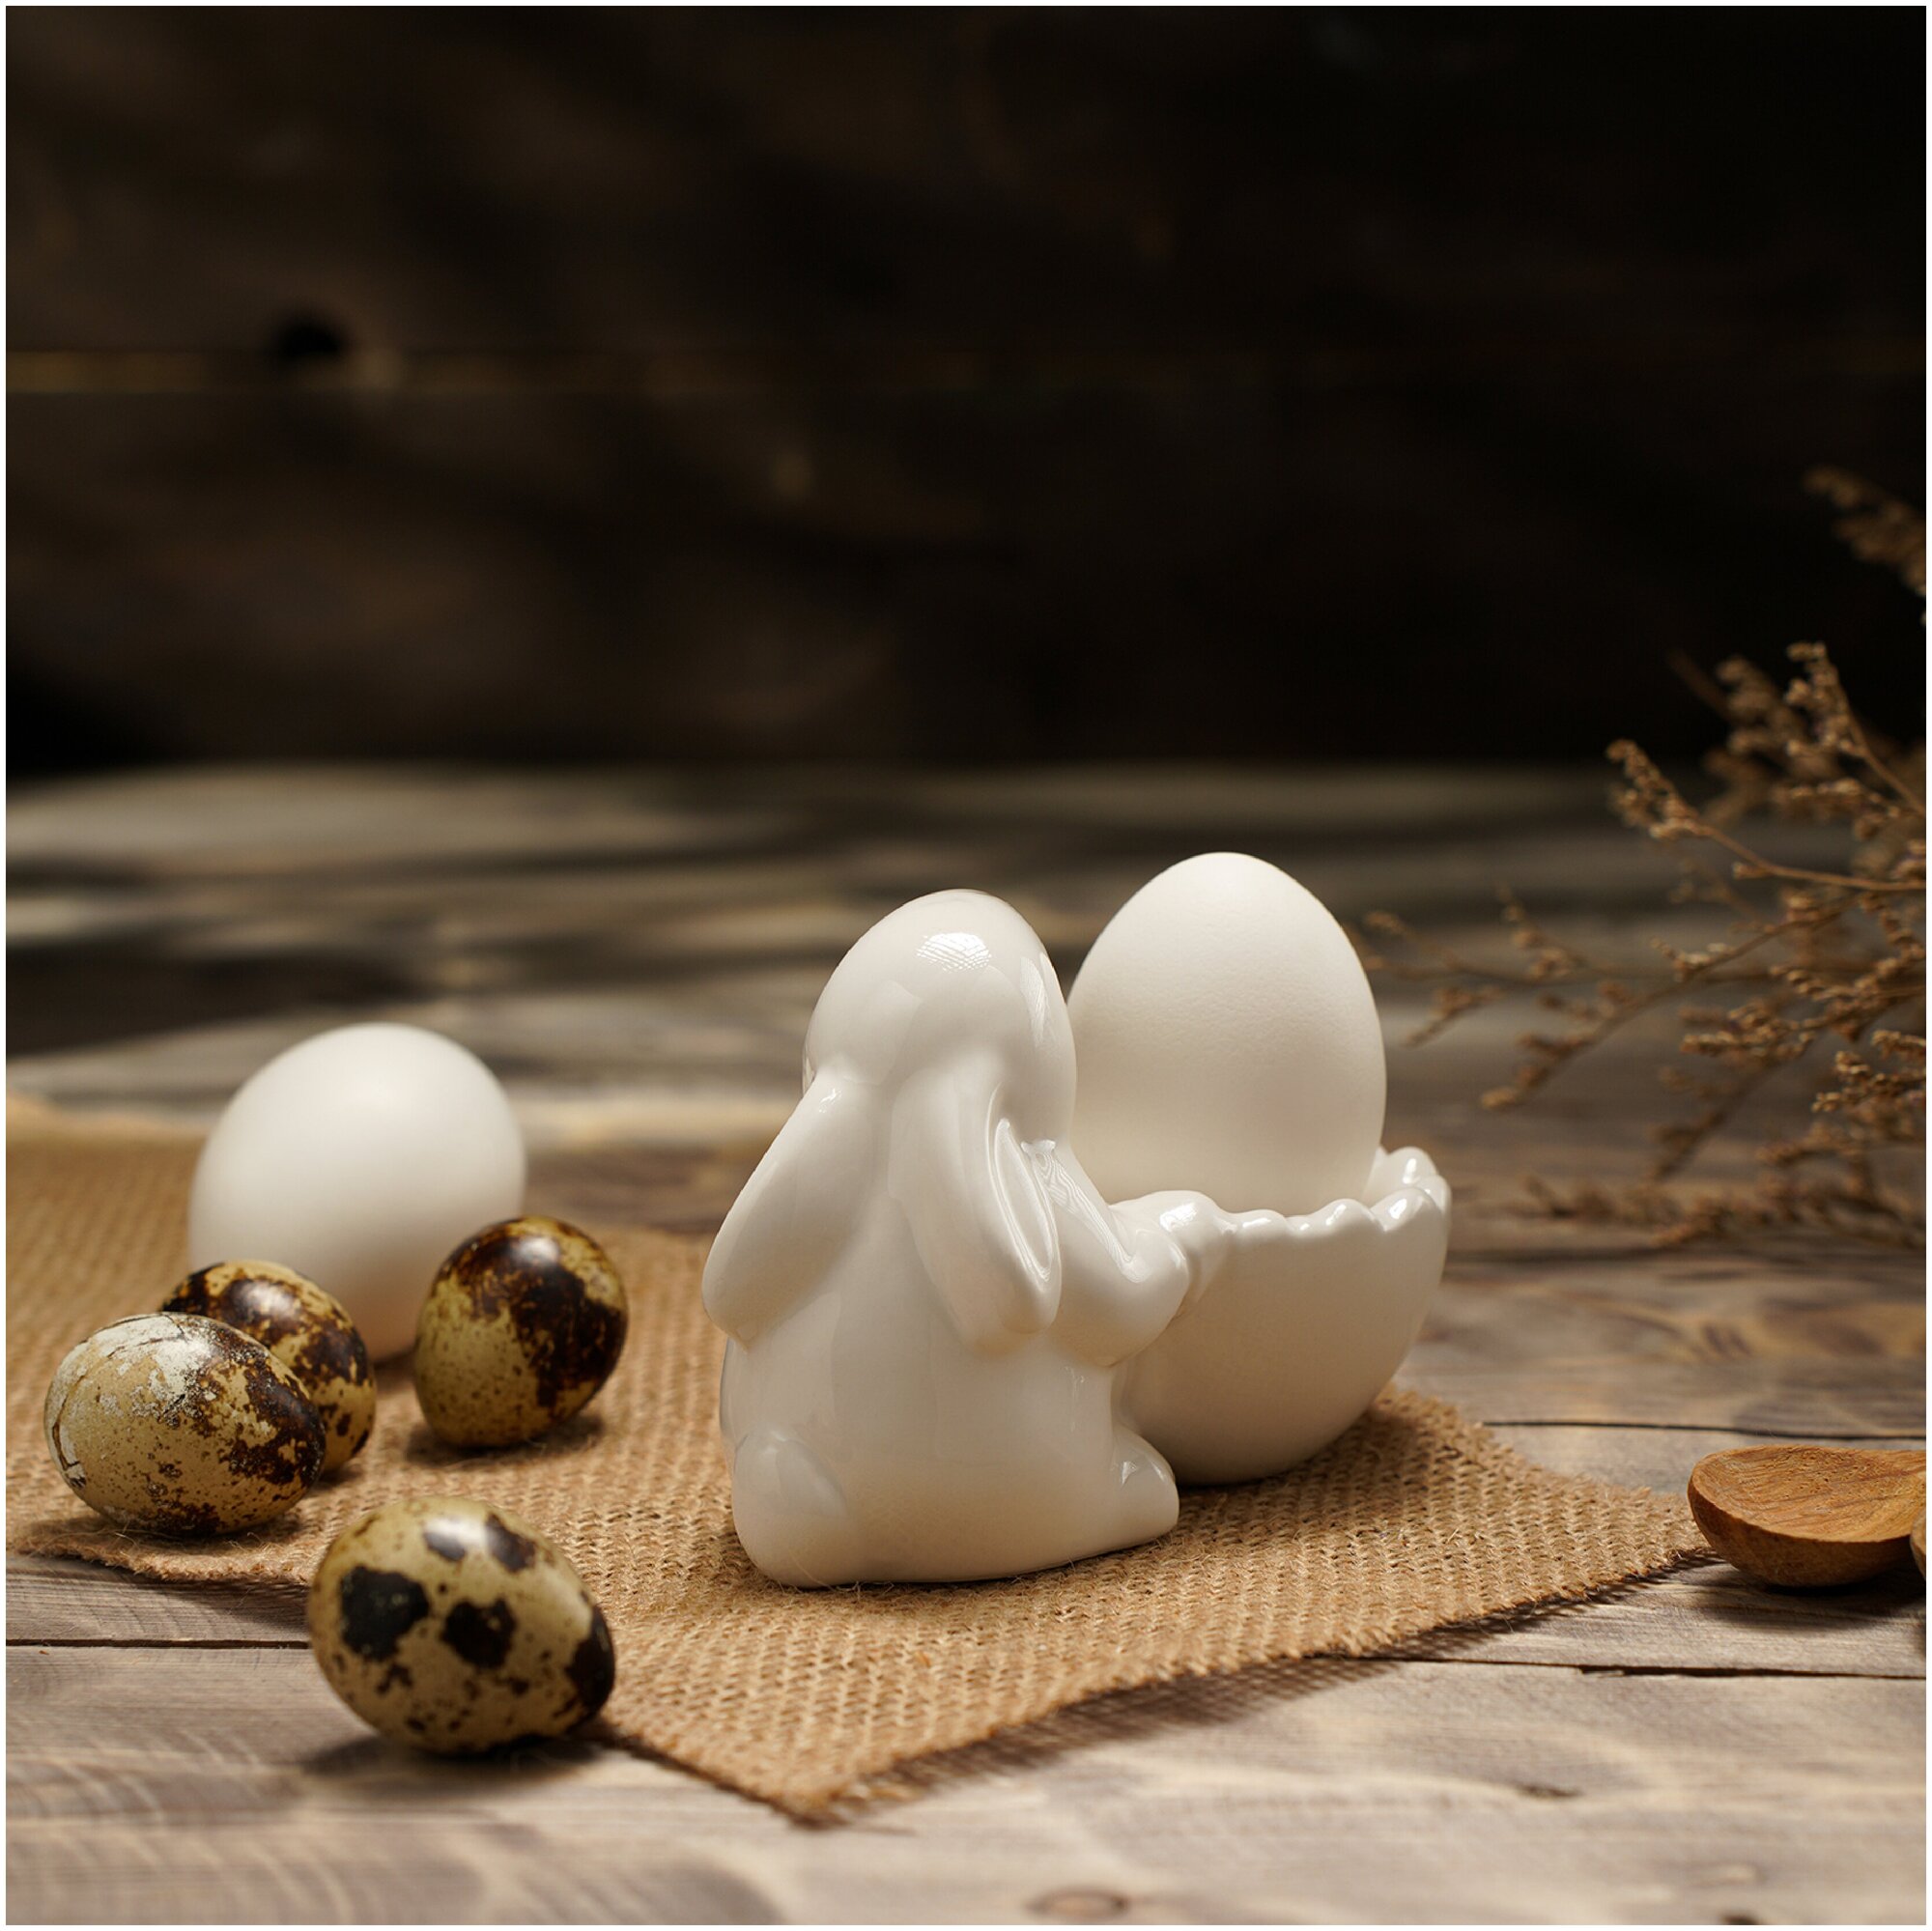 Подставка для яиц Доляна «Зайка», 11×6×8 см